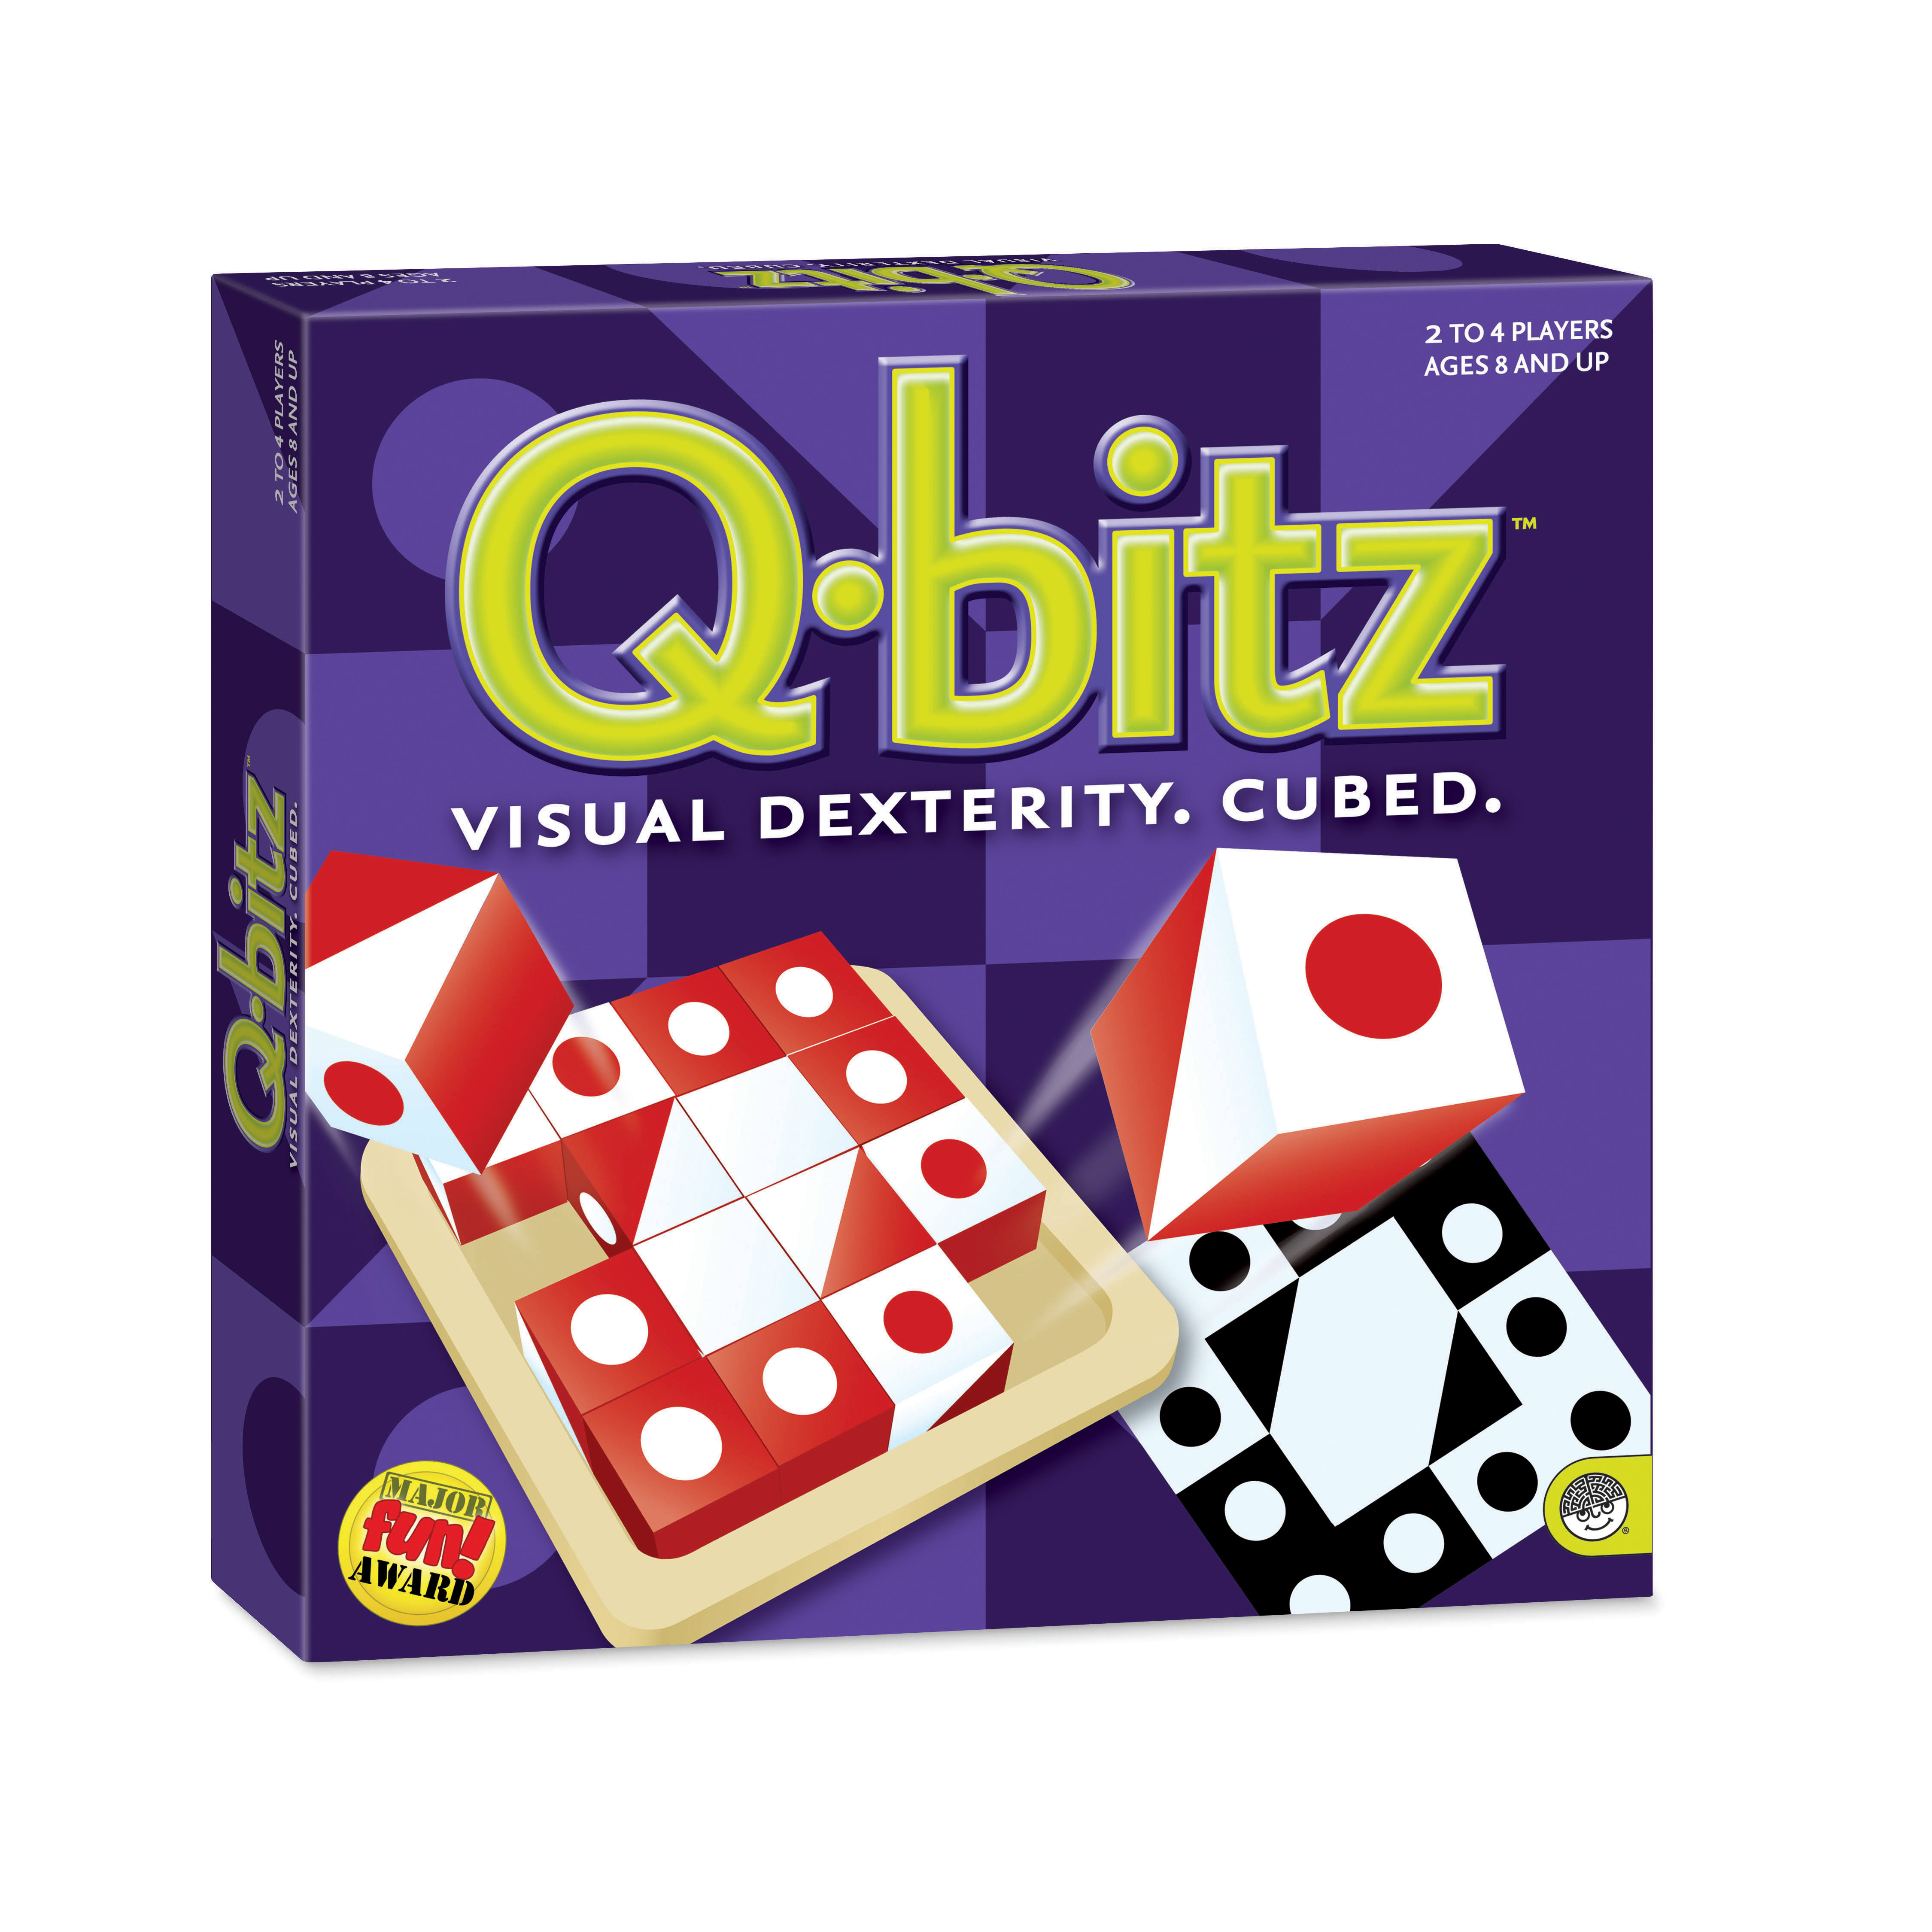 Q-bitz Visual Dexterity Game